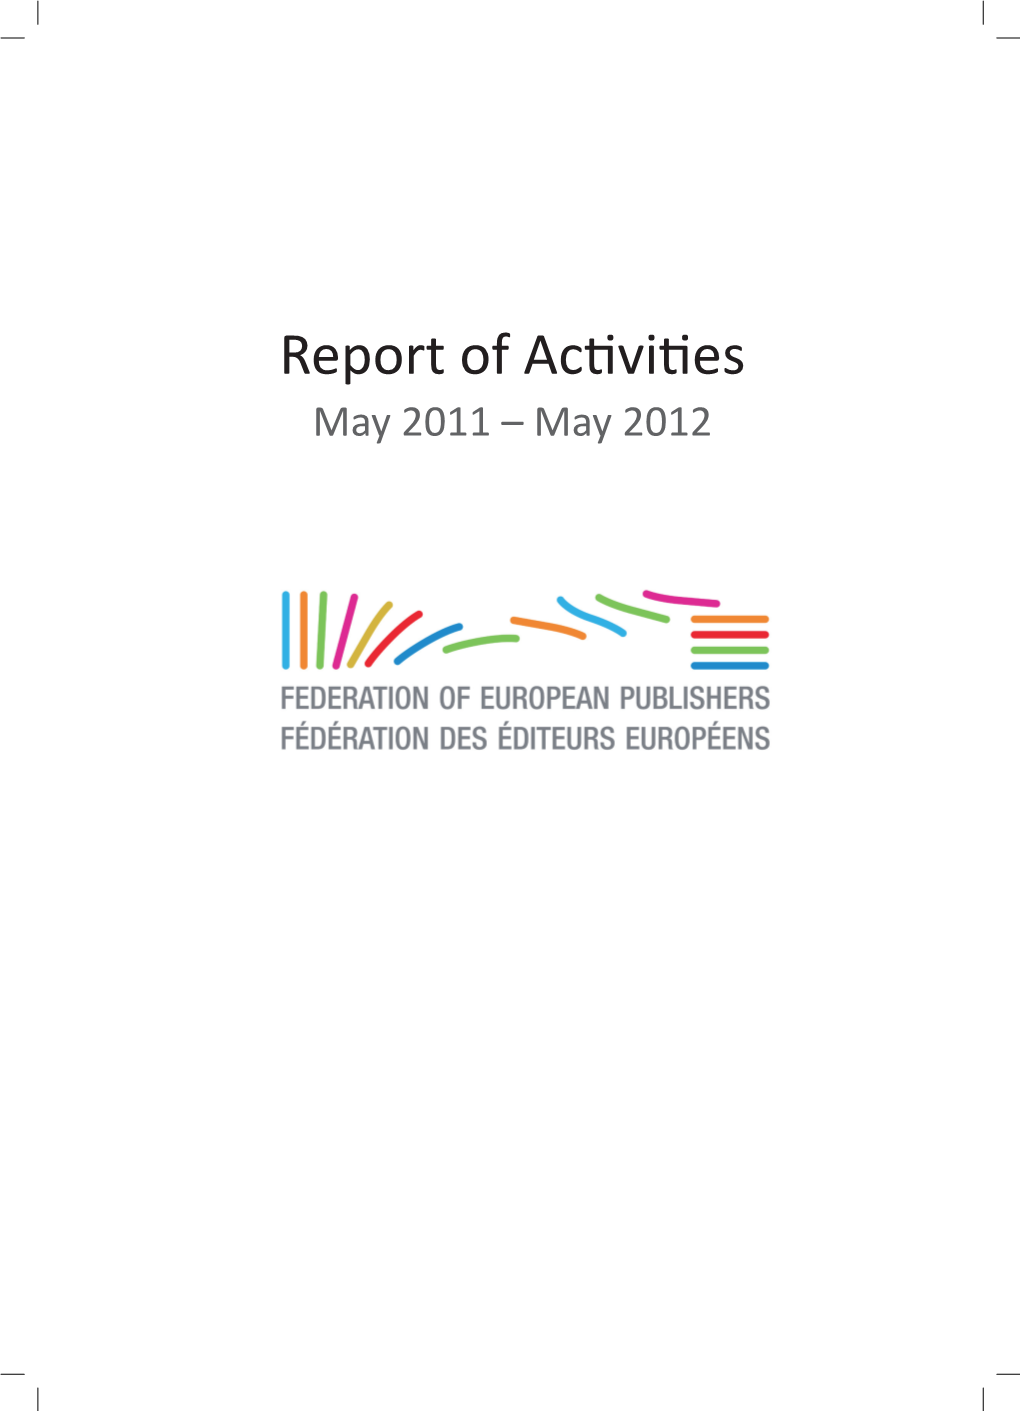 FEP Report of Activities 2011 - 2012 3 4 FEP Report of Activities 2011 - 2012 Foreword by Fergal Tobin, FEP President